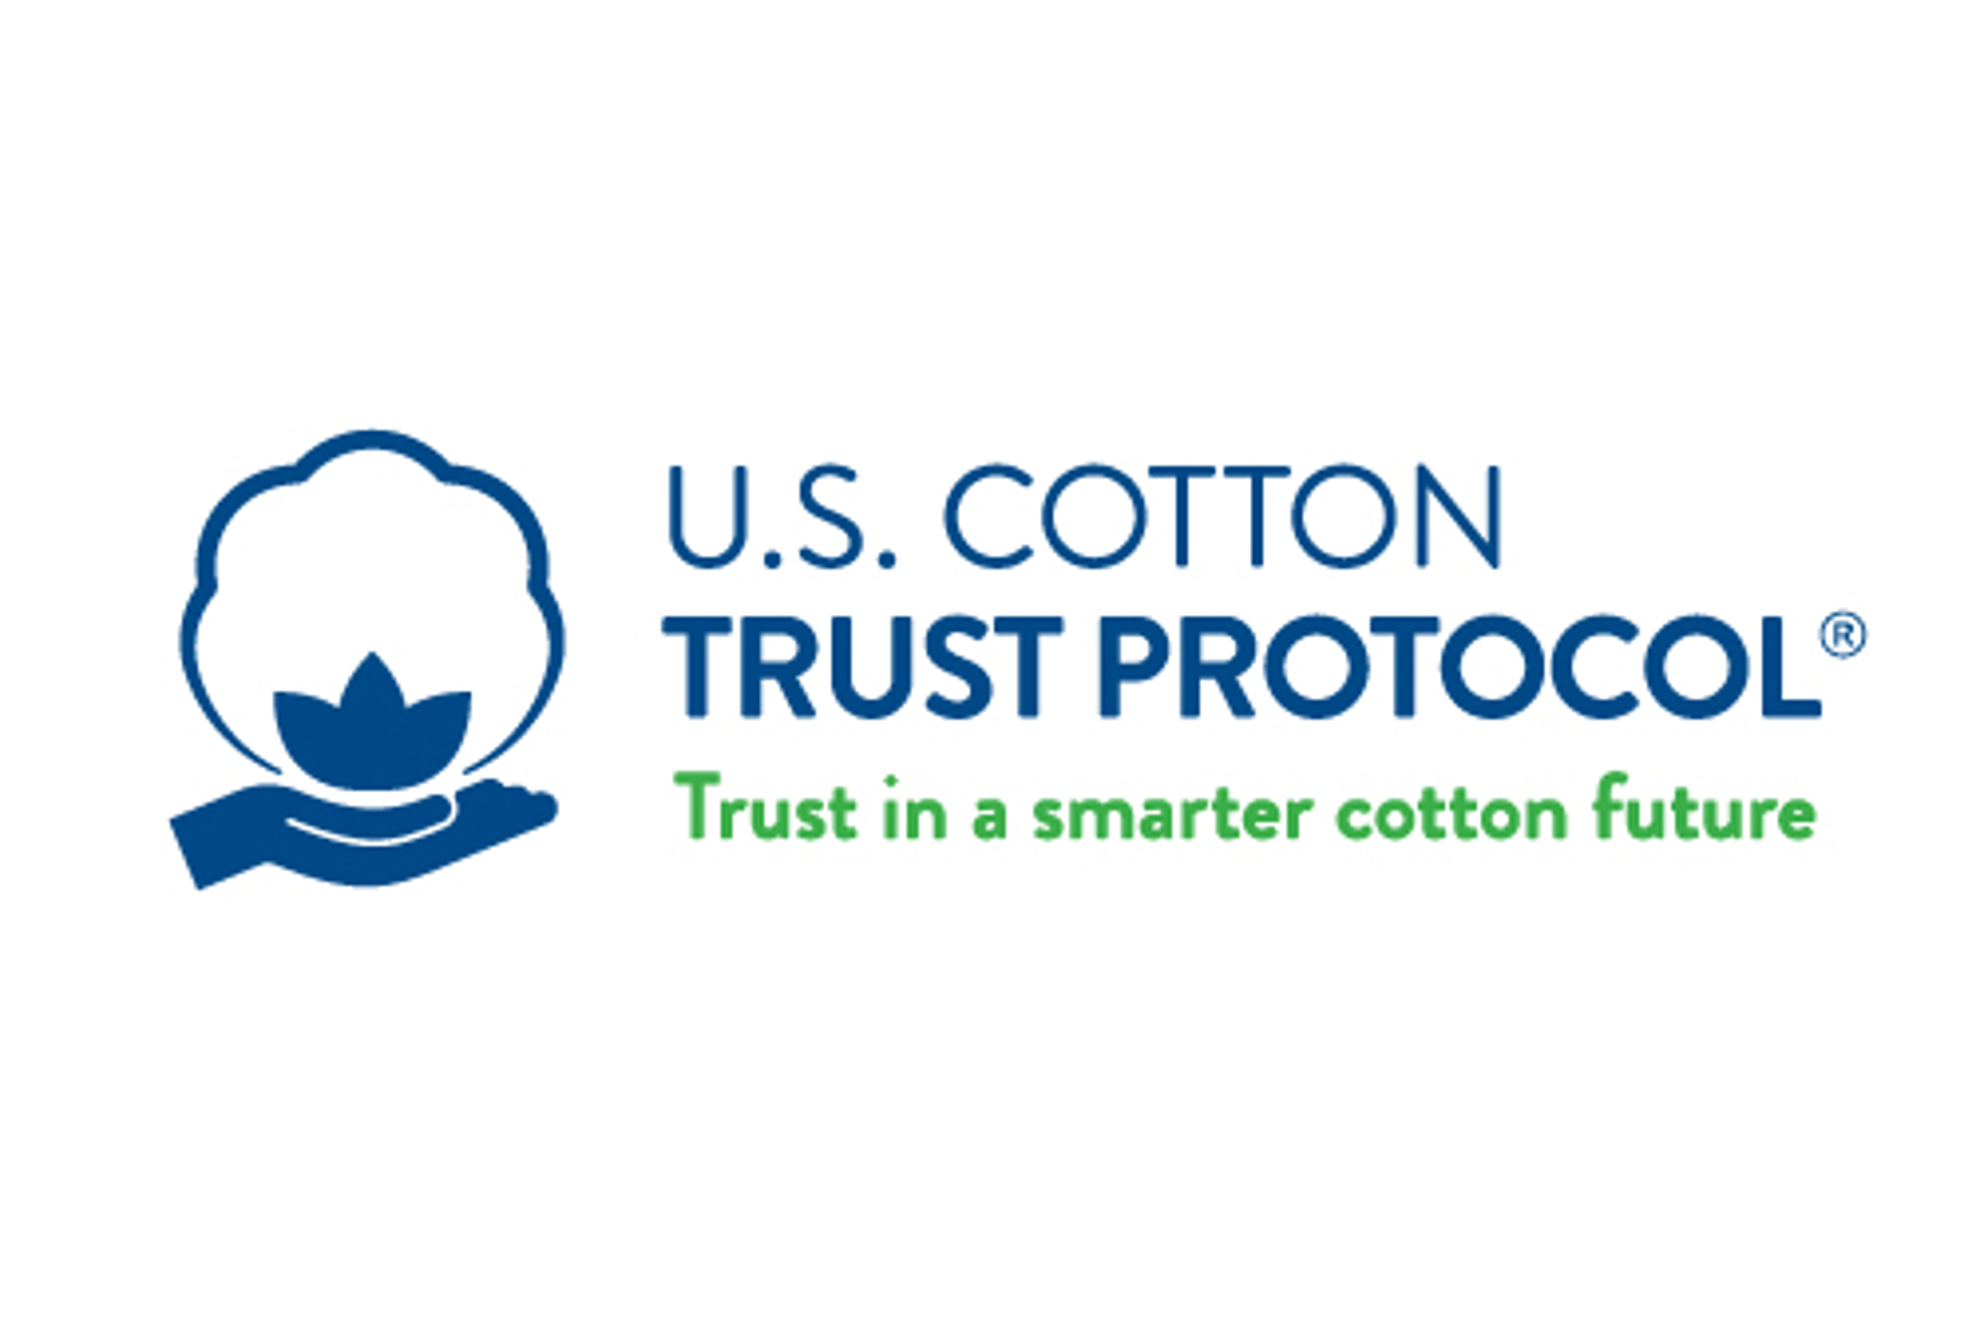 U.S. Cotton Trust Protocol logo